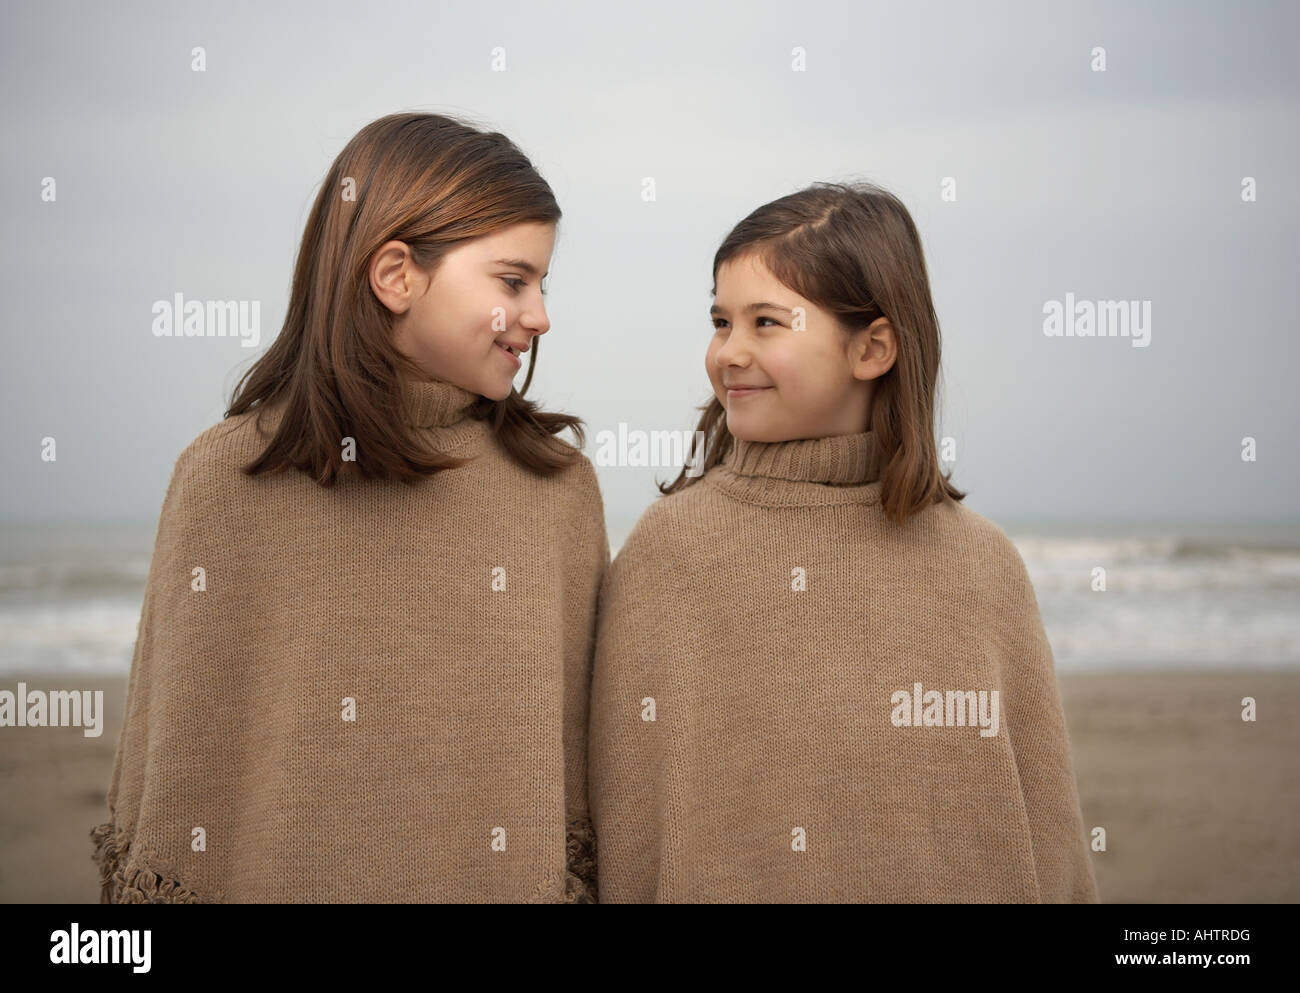 Girls (6-11) smiling on beach Stock Photo